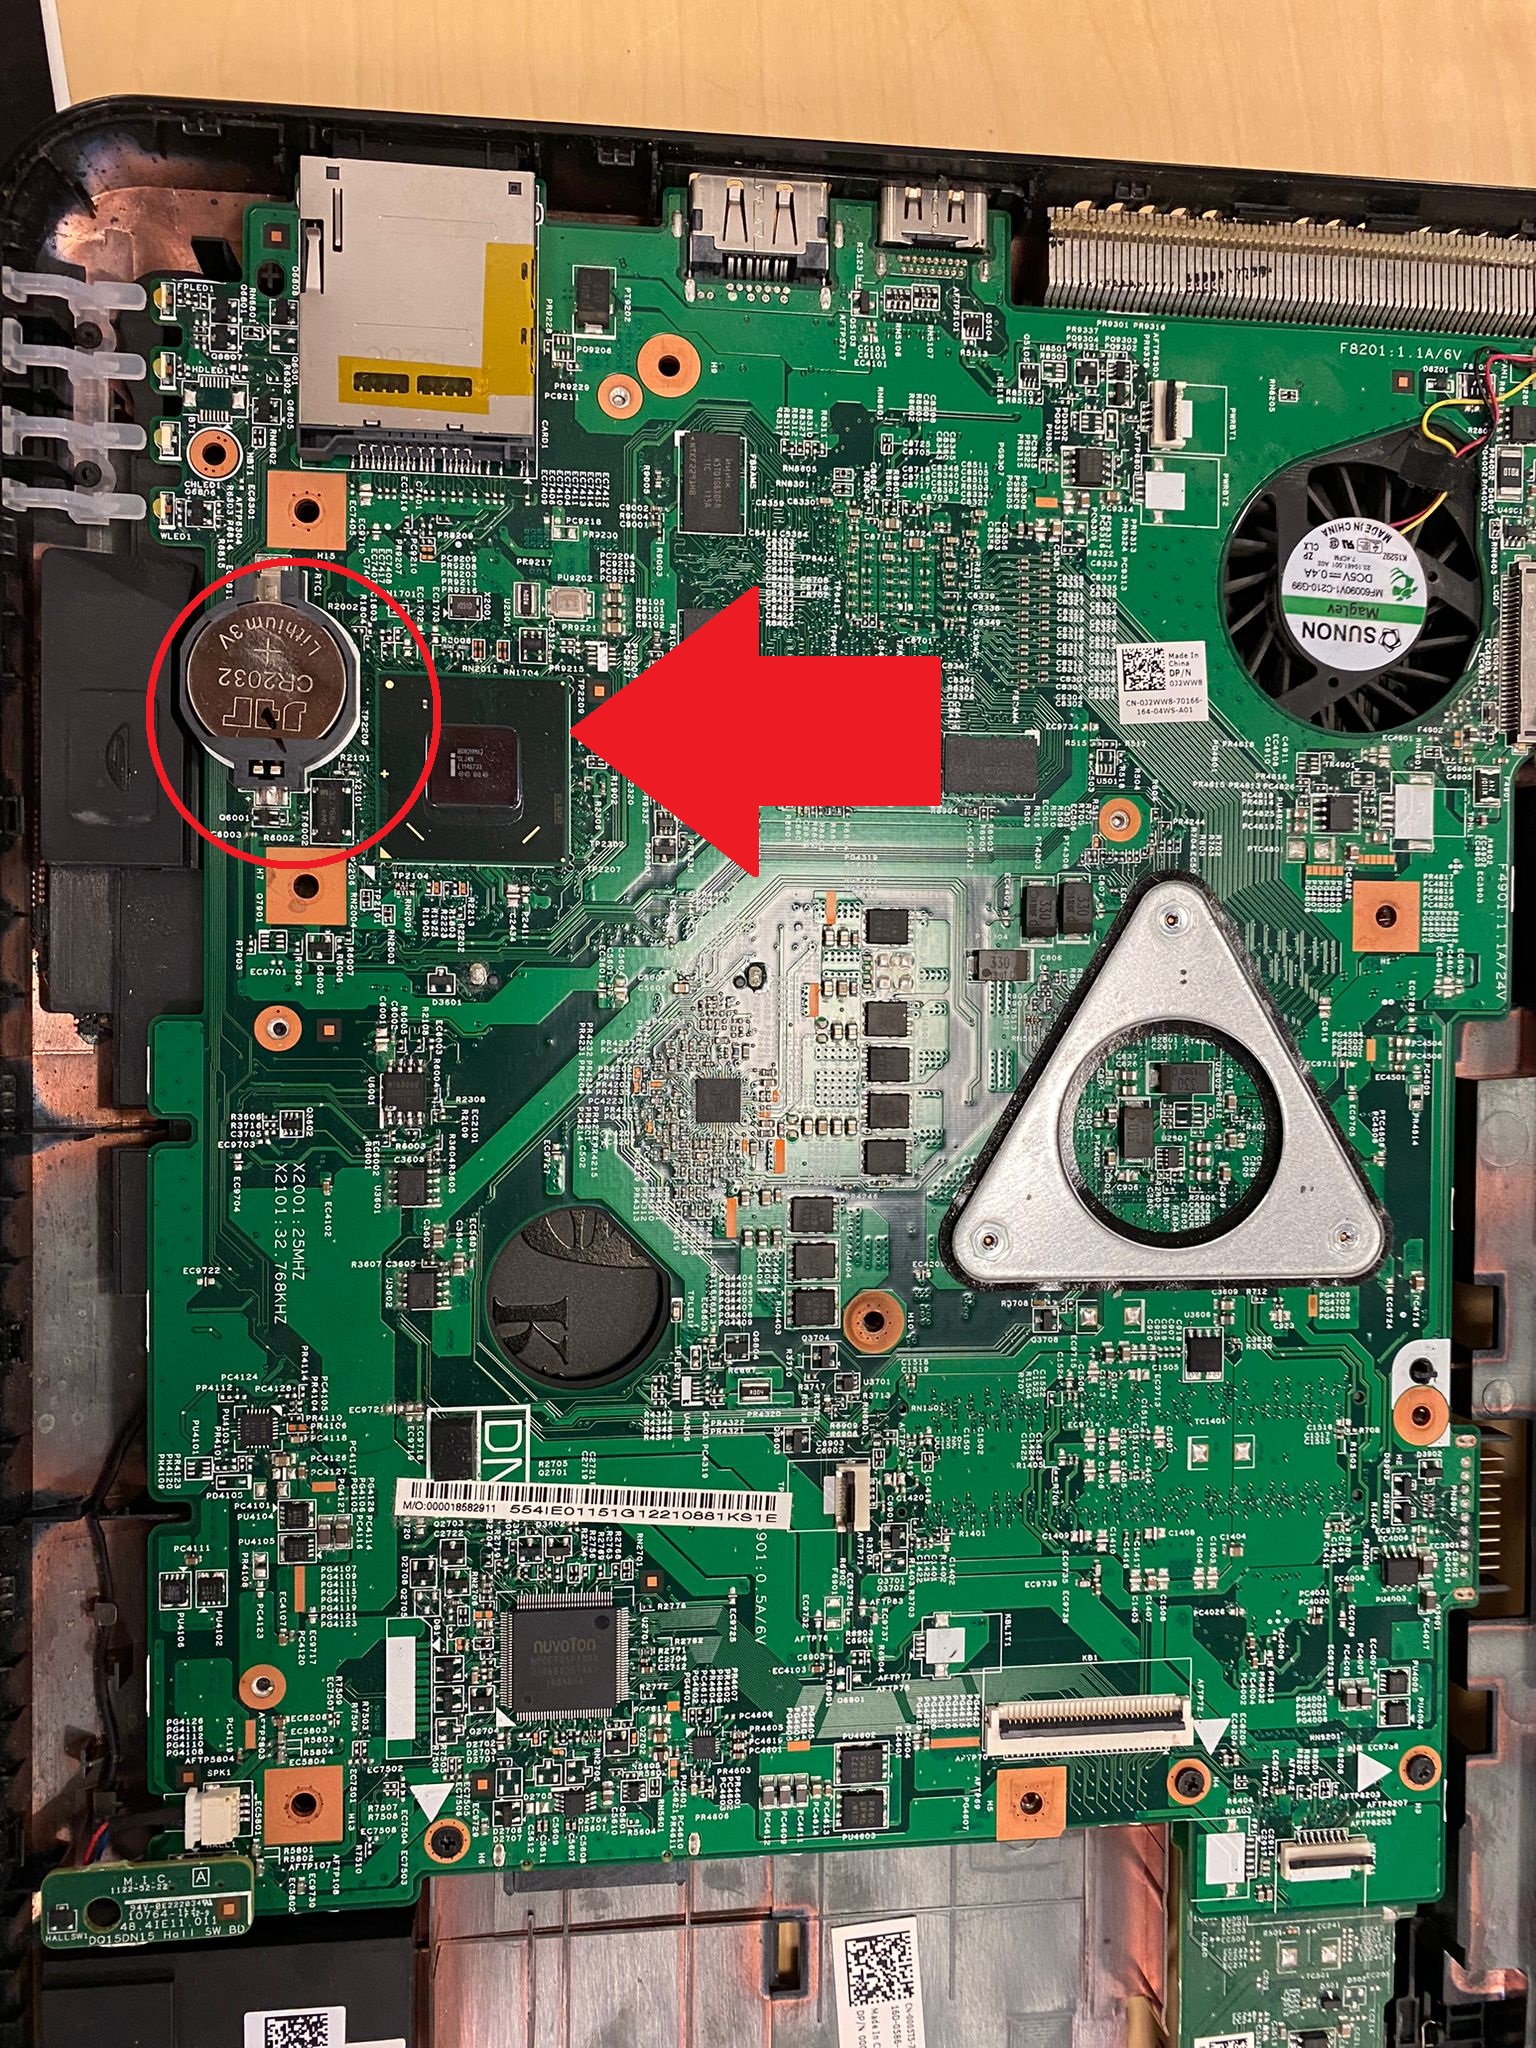 Cum schimbam bateria bios la un laptop Dell Inspiron N5110 – Askit Solutii si rezolvari pentru situatii IT